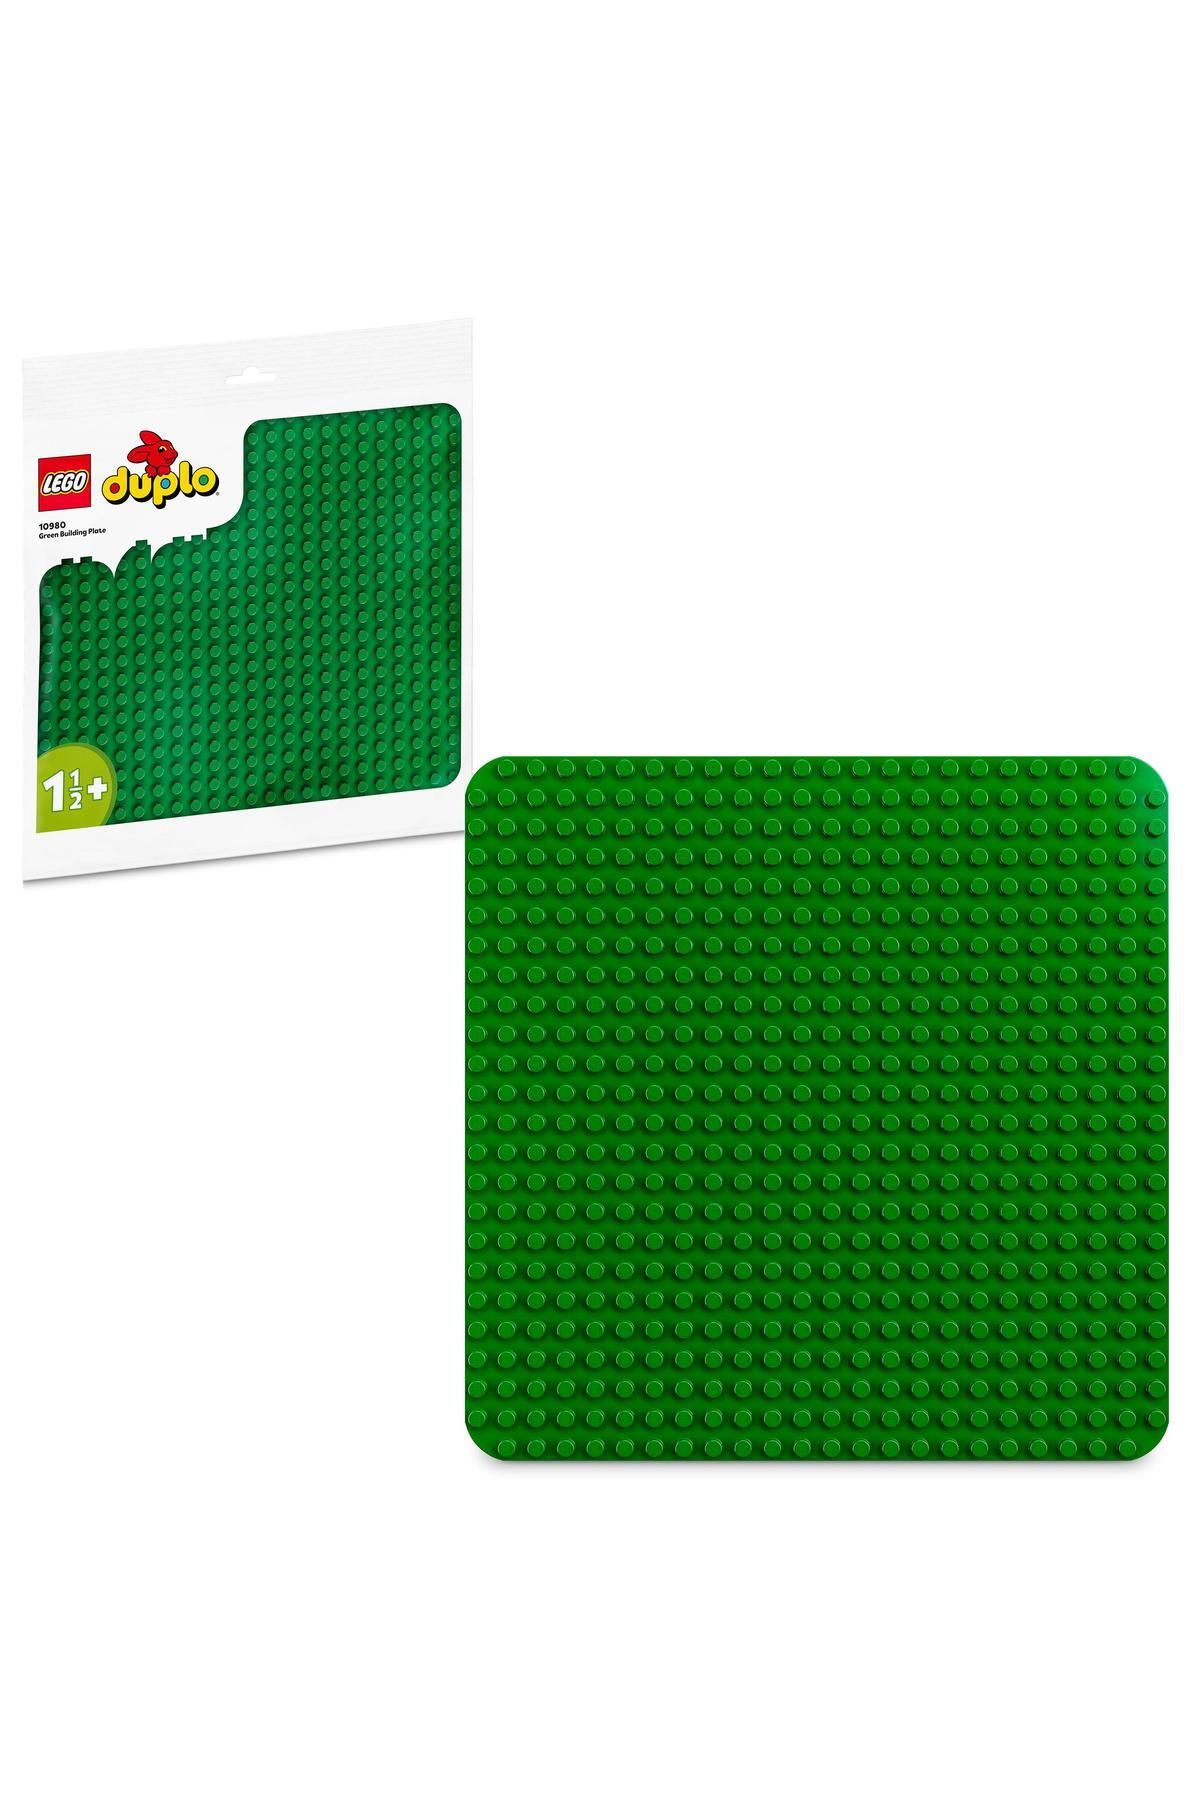 LEGO 10980 Duplo Yeşil Zemin, 1 Parça +1,5 Yaş